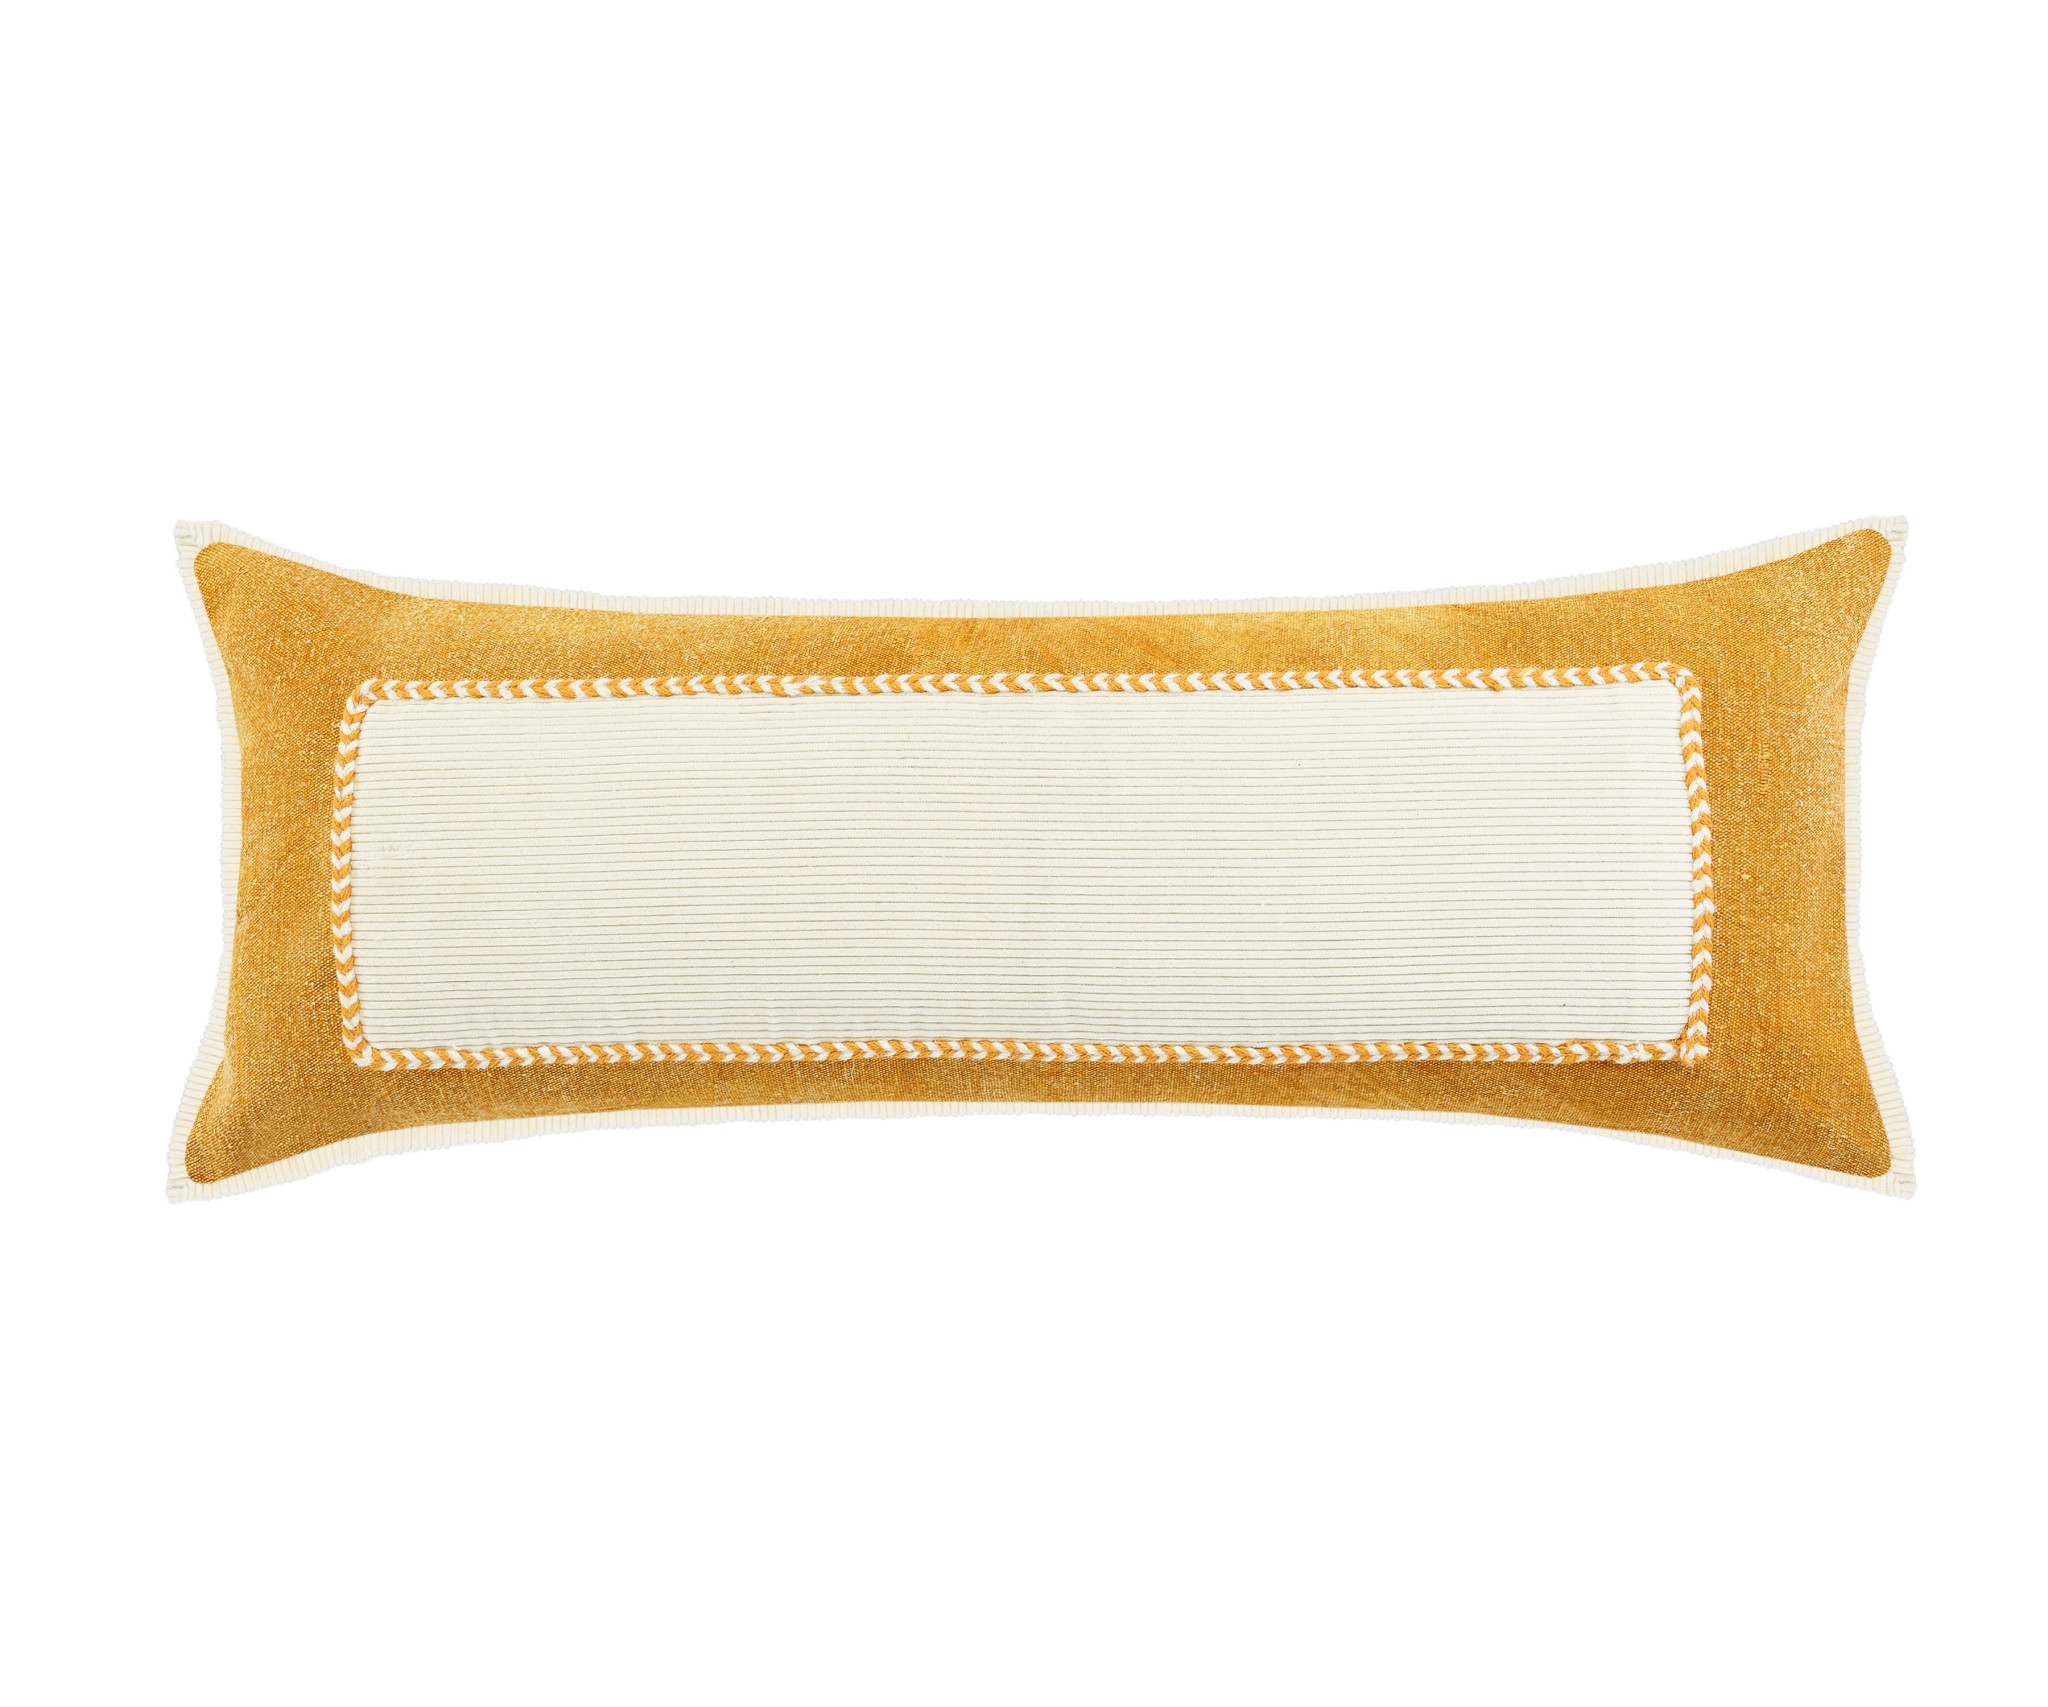 14" X 36" Golden Yellow And Cream 100% Cotton Zippered Pillow-517380-1